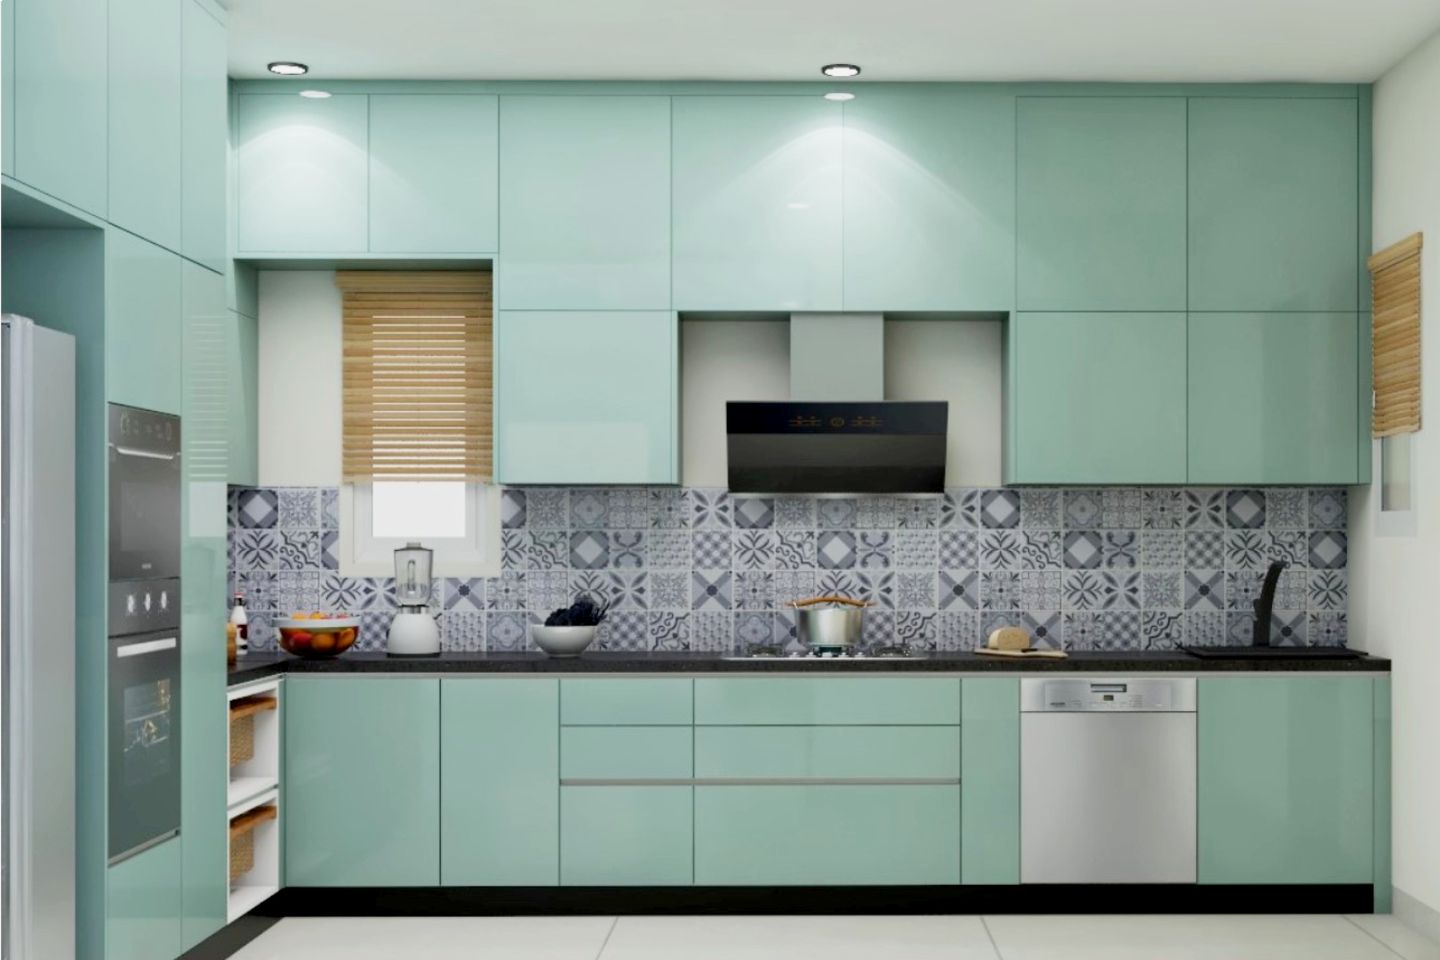 Modern Aqua Green Kitchen Cabinet Design With Moroccan Kitchen Backsplash - Livspace